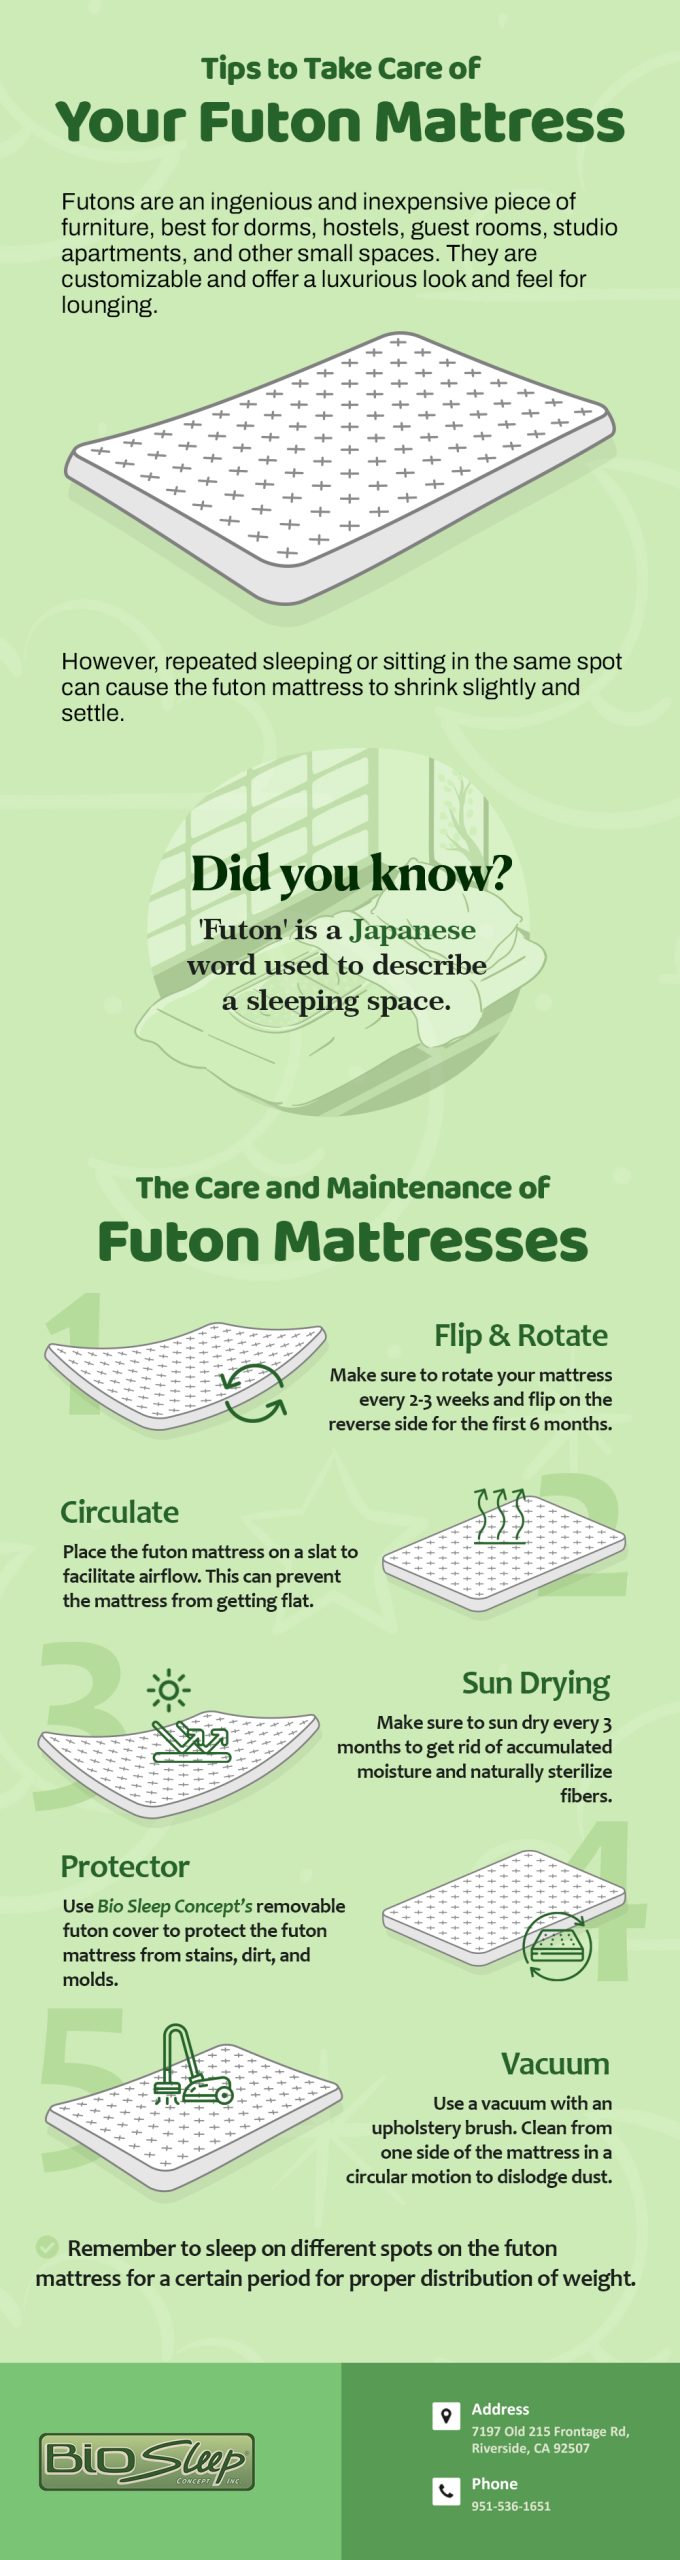 Futon Mattress Maintenance Tips